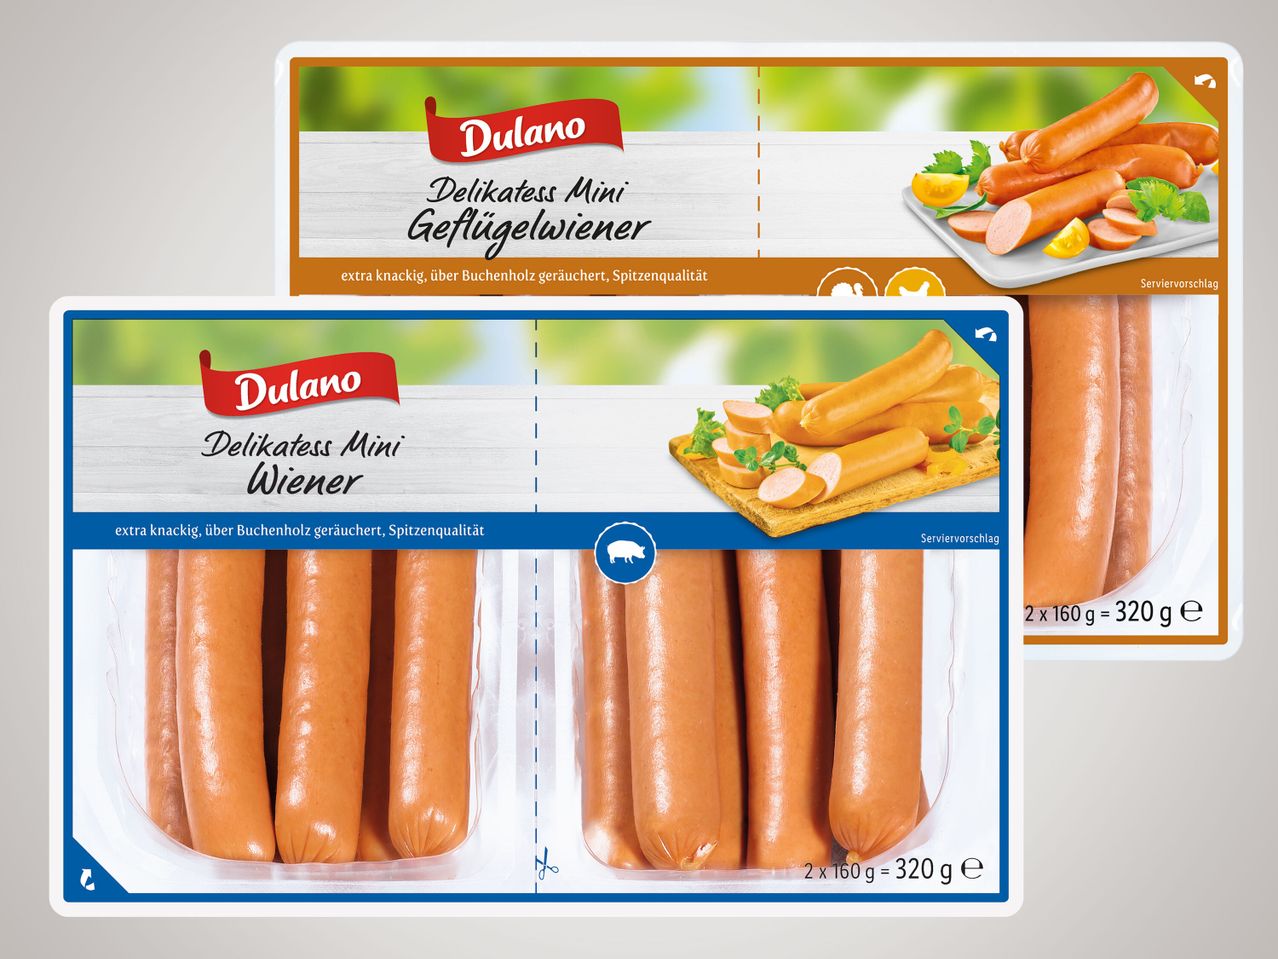 Gehe zu Vollbildansicht: Dulano Delikatess Mini Wiener - Bild 1